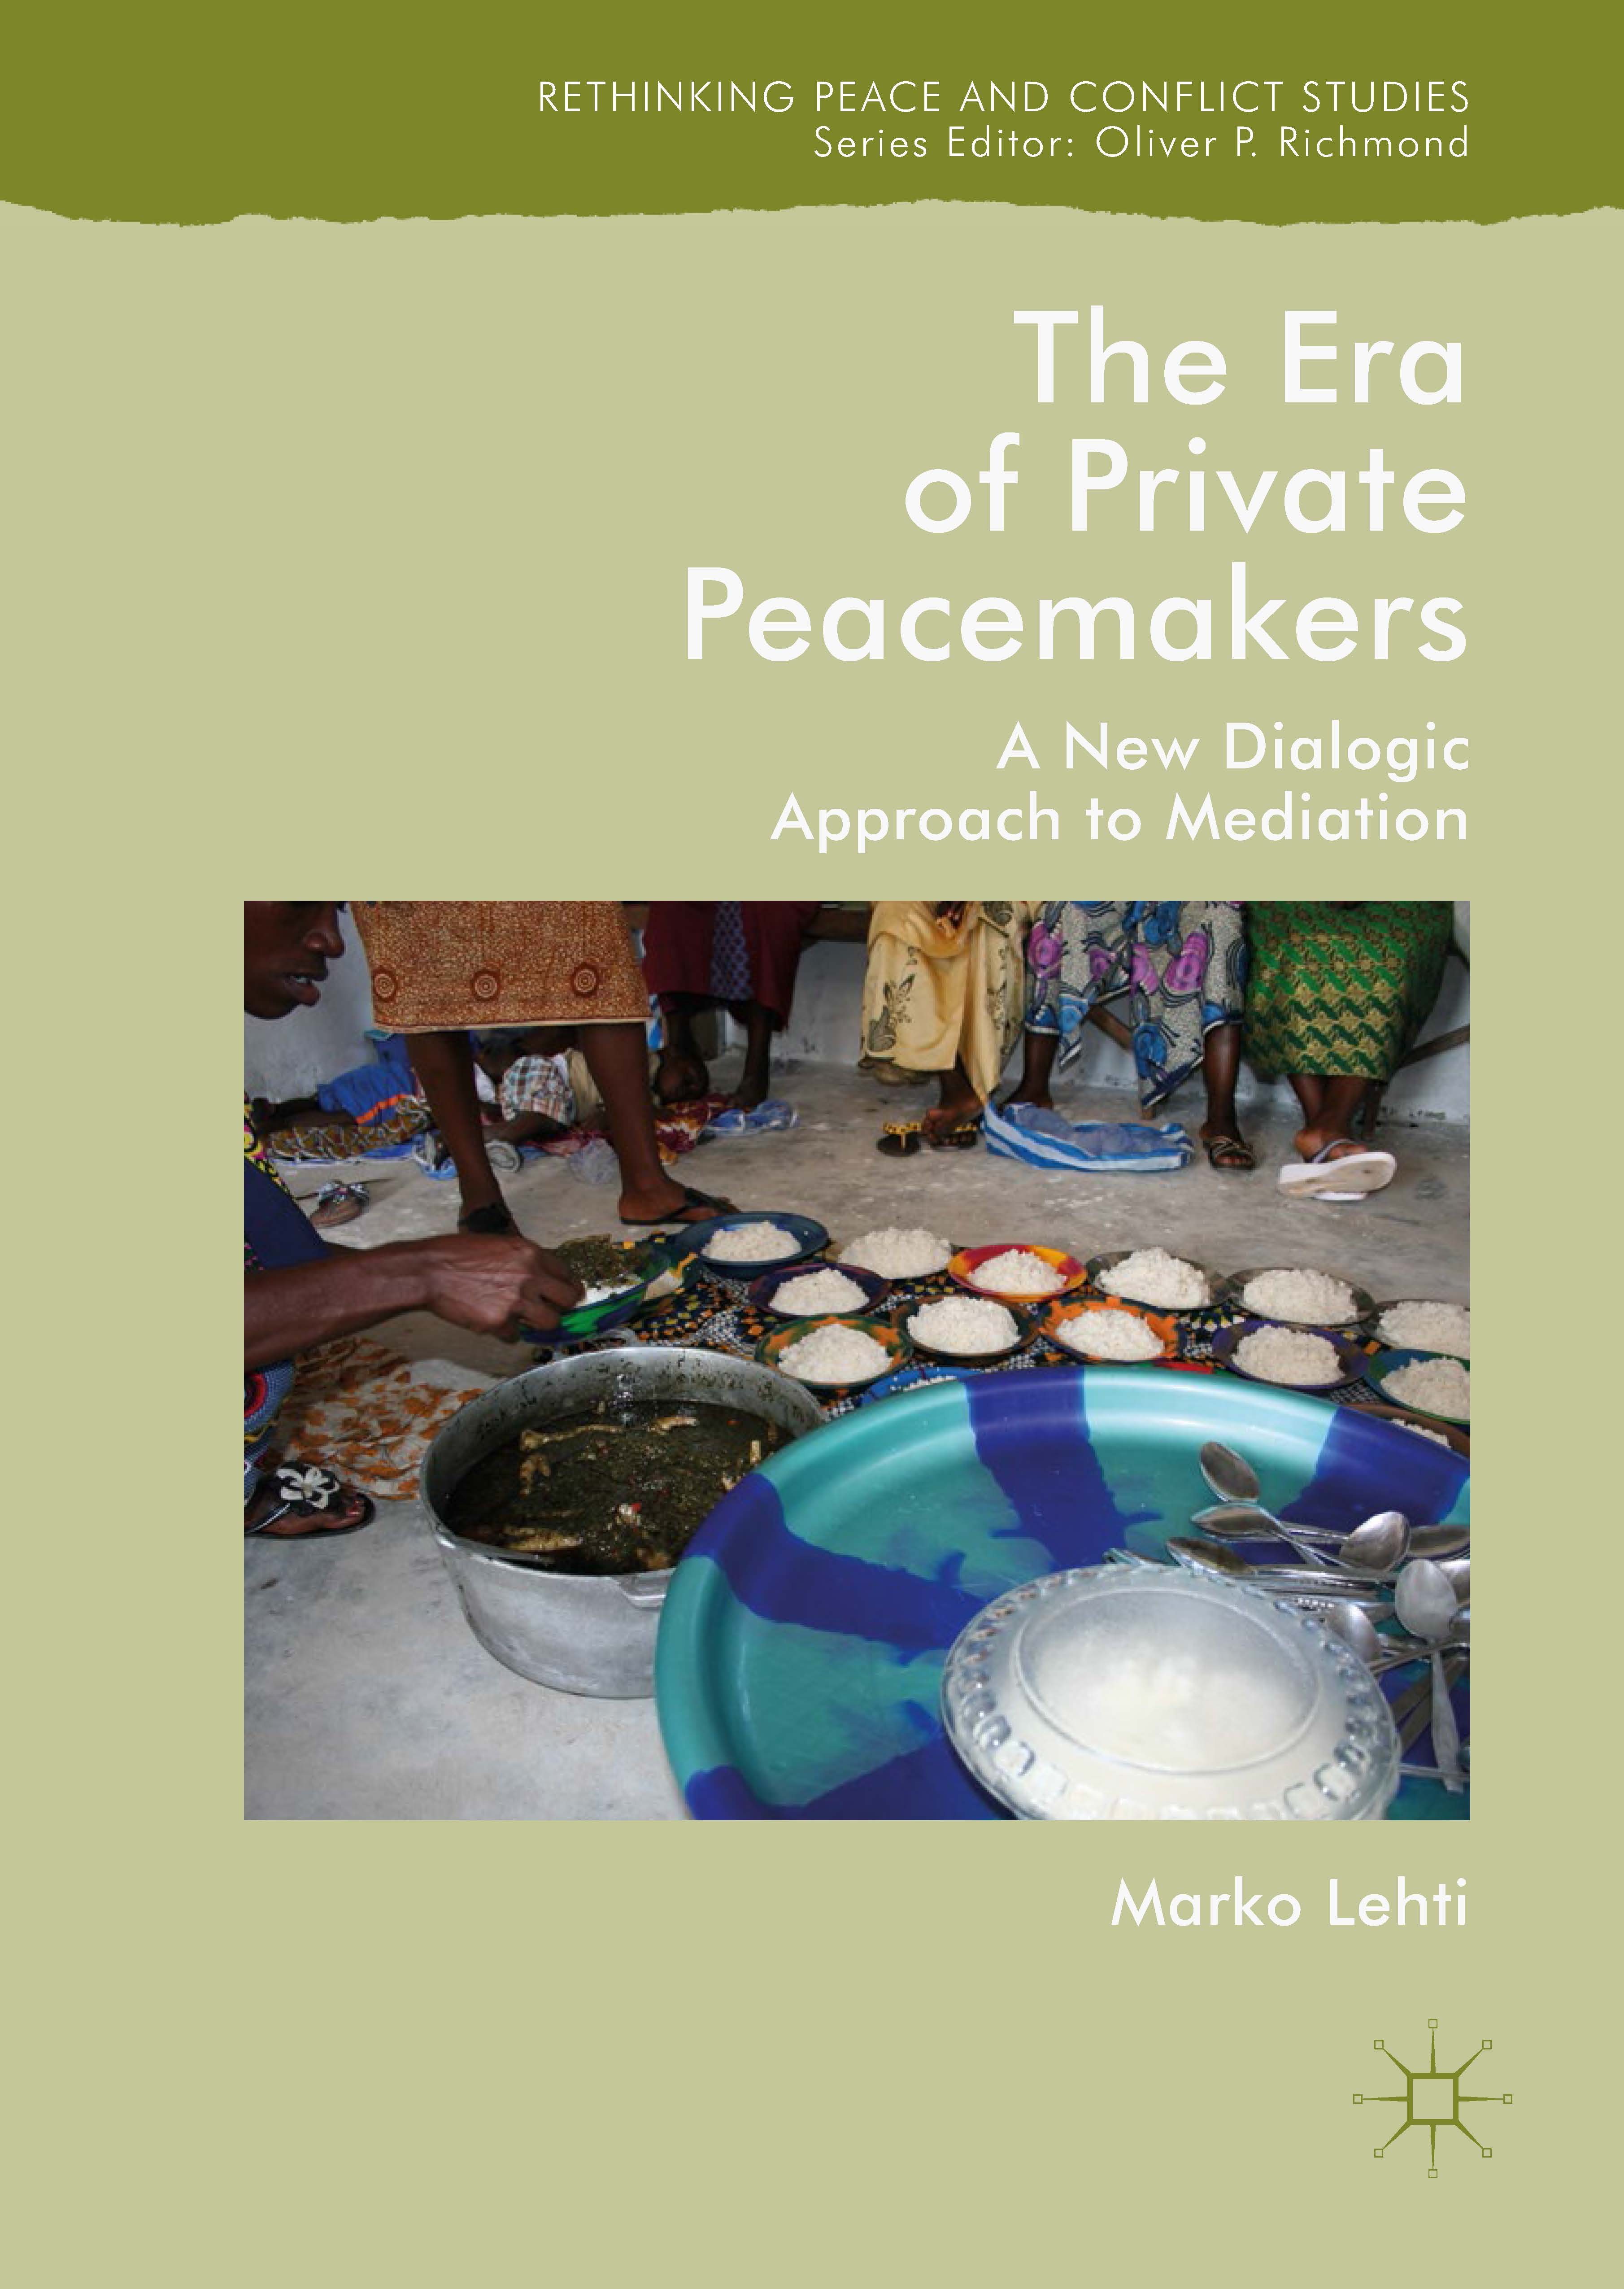 页面提取自－2019_Book_The Era of Private Peacemakers.jpg